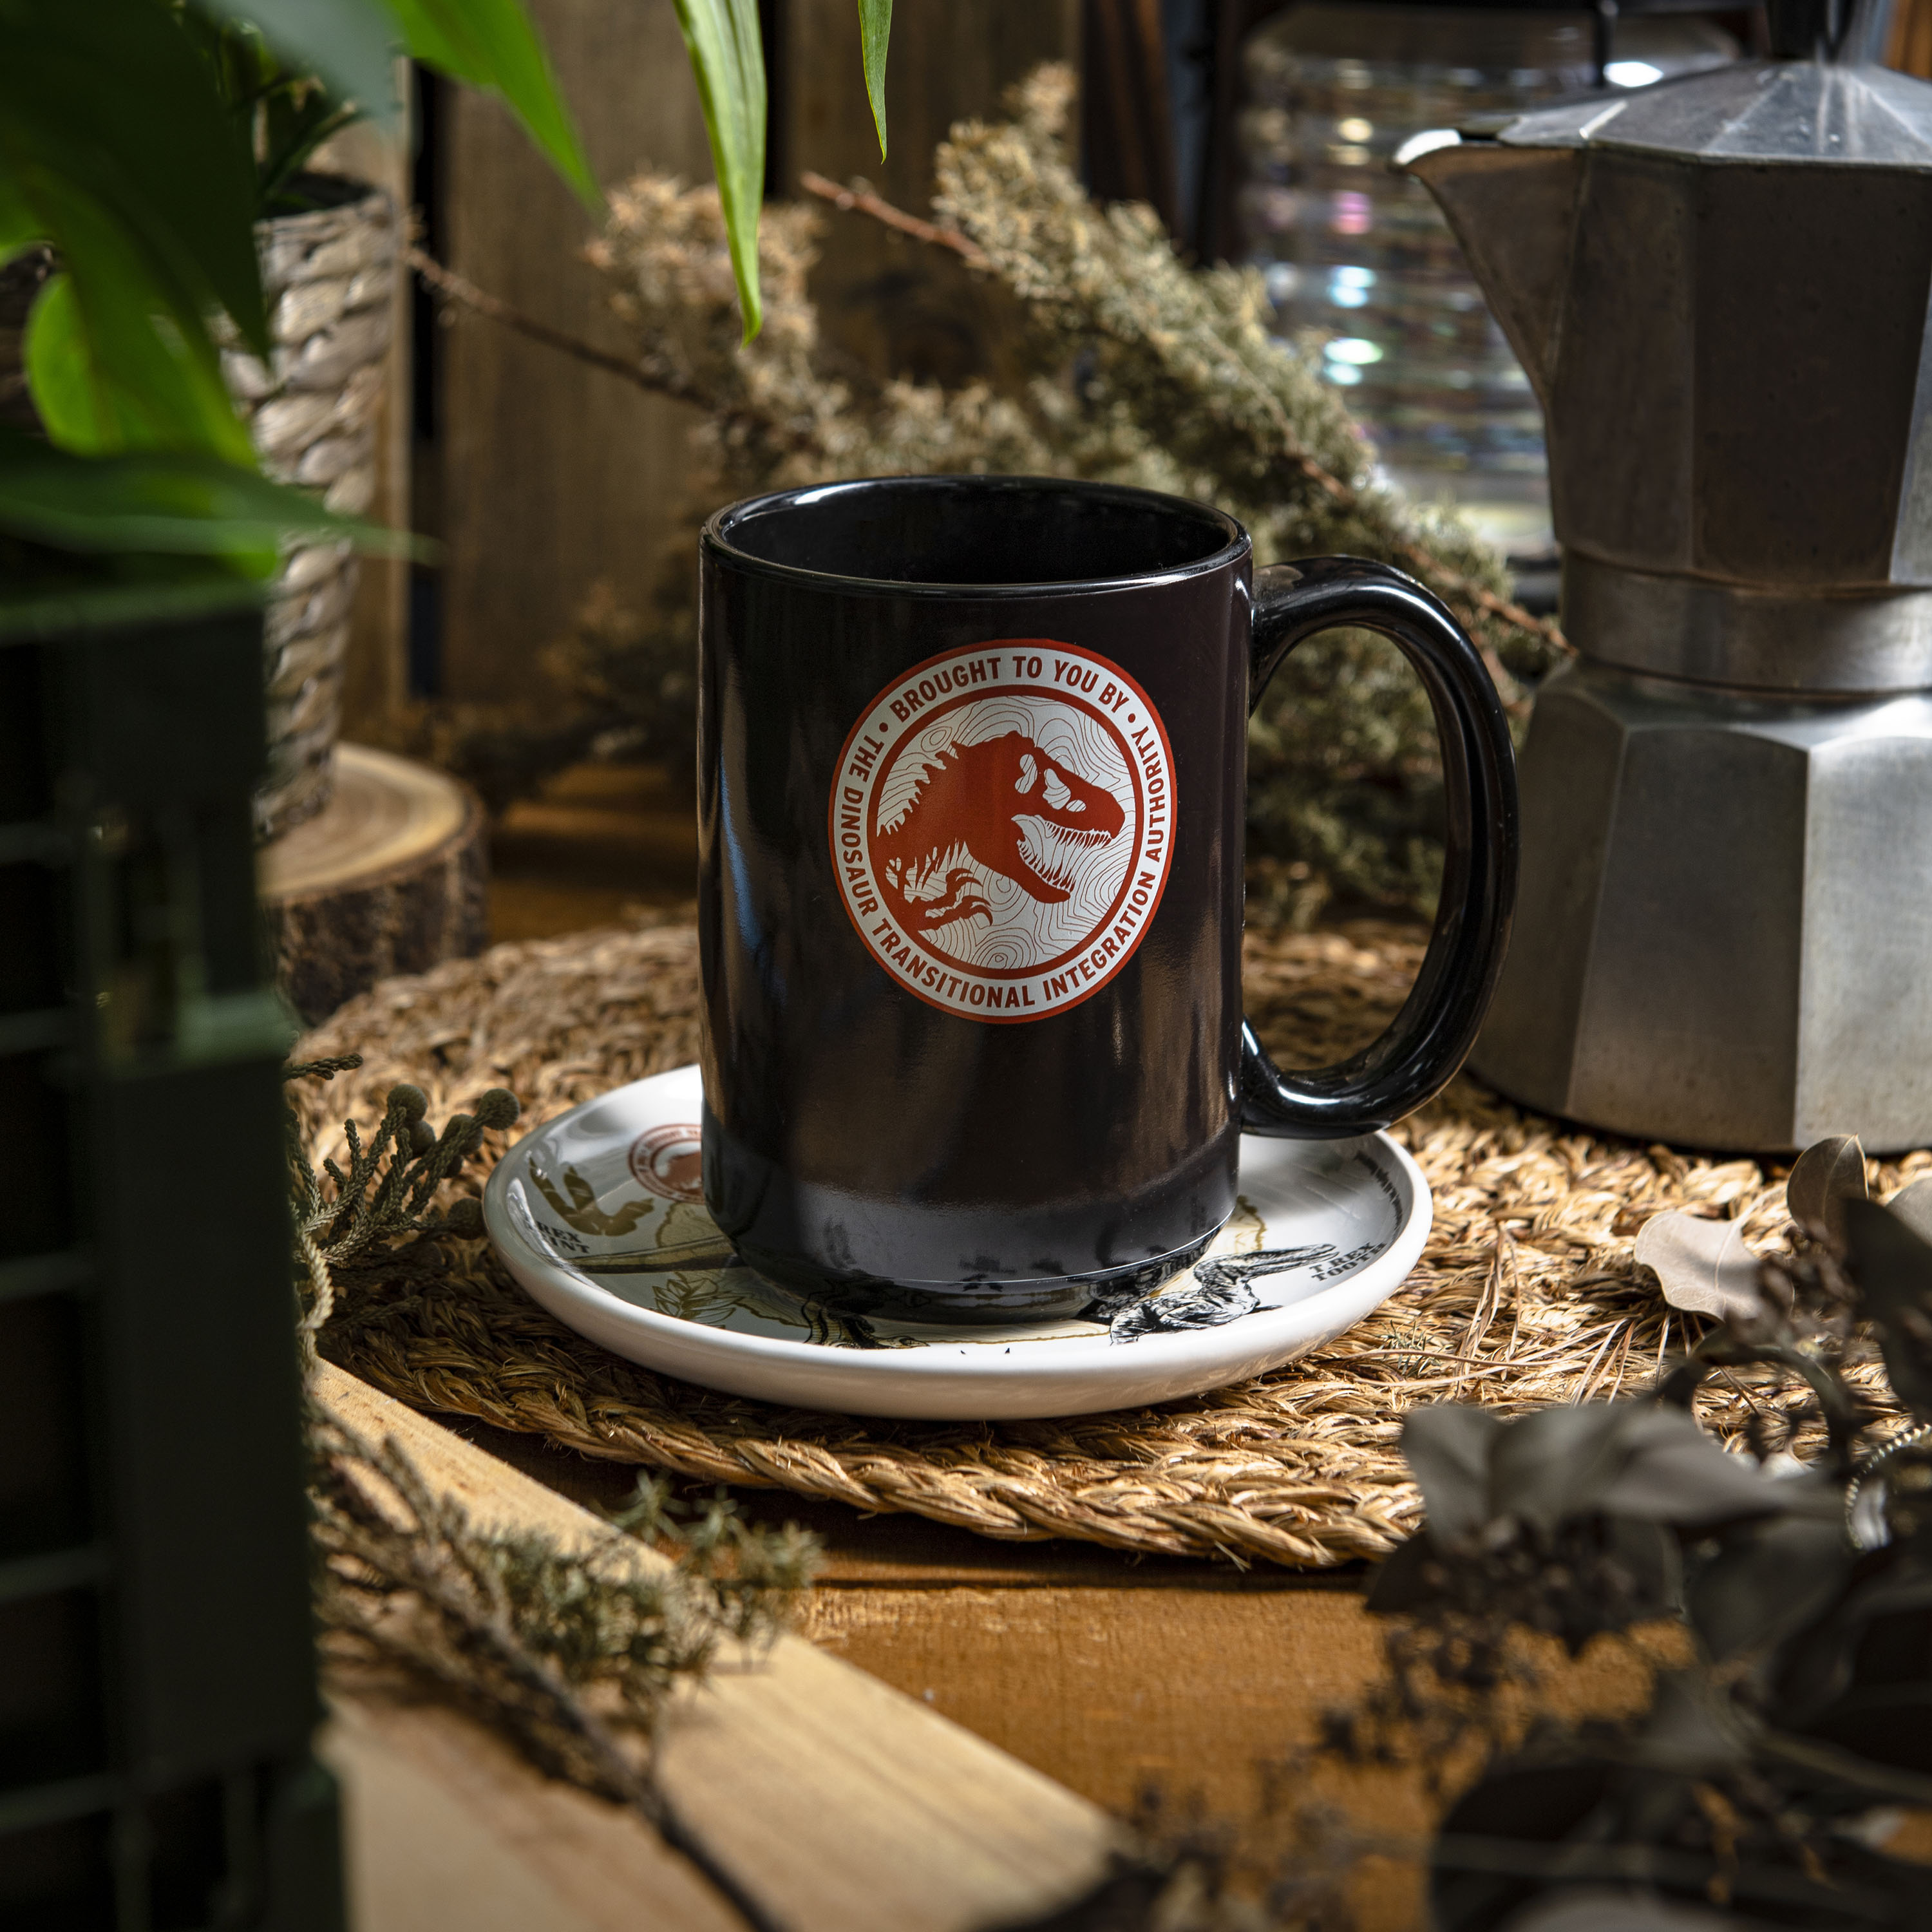 Jurassic World Dominion Ceramic Coffee Mug and Plate, T-Rex, 2-piece set slideshow image 6